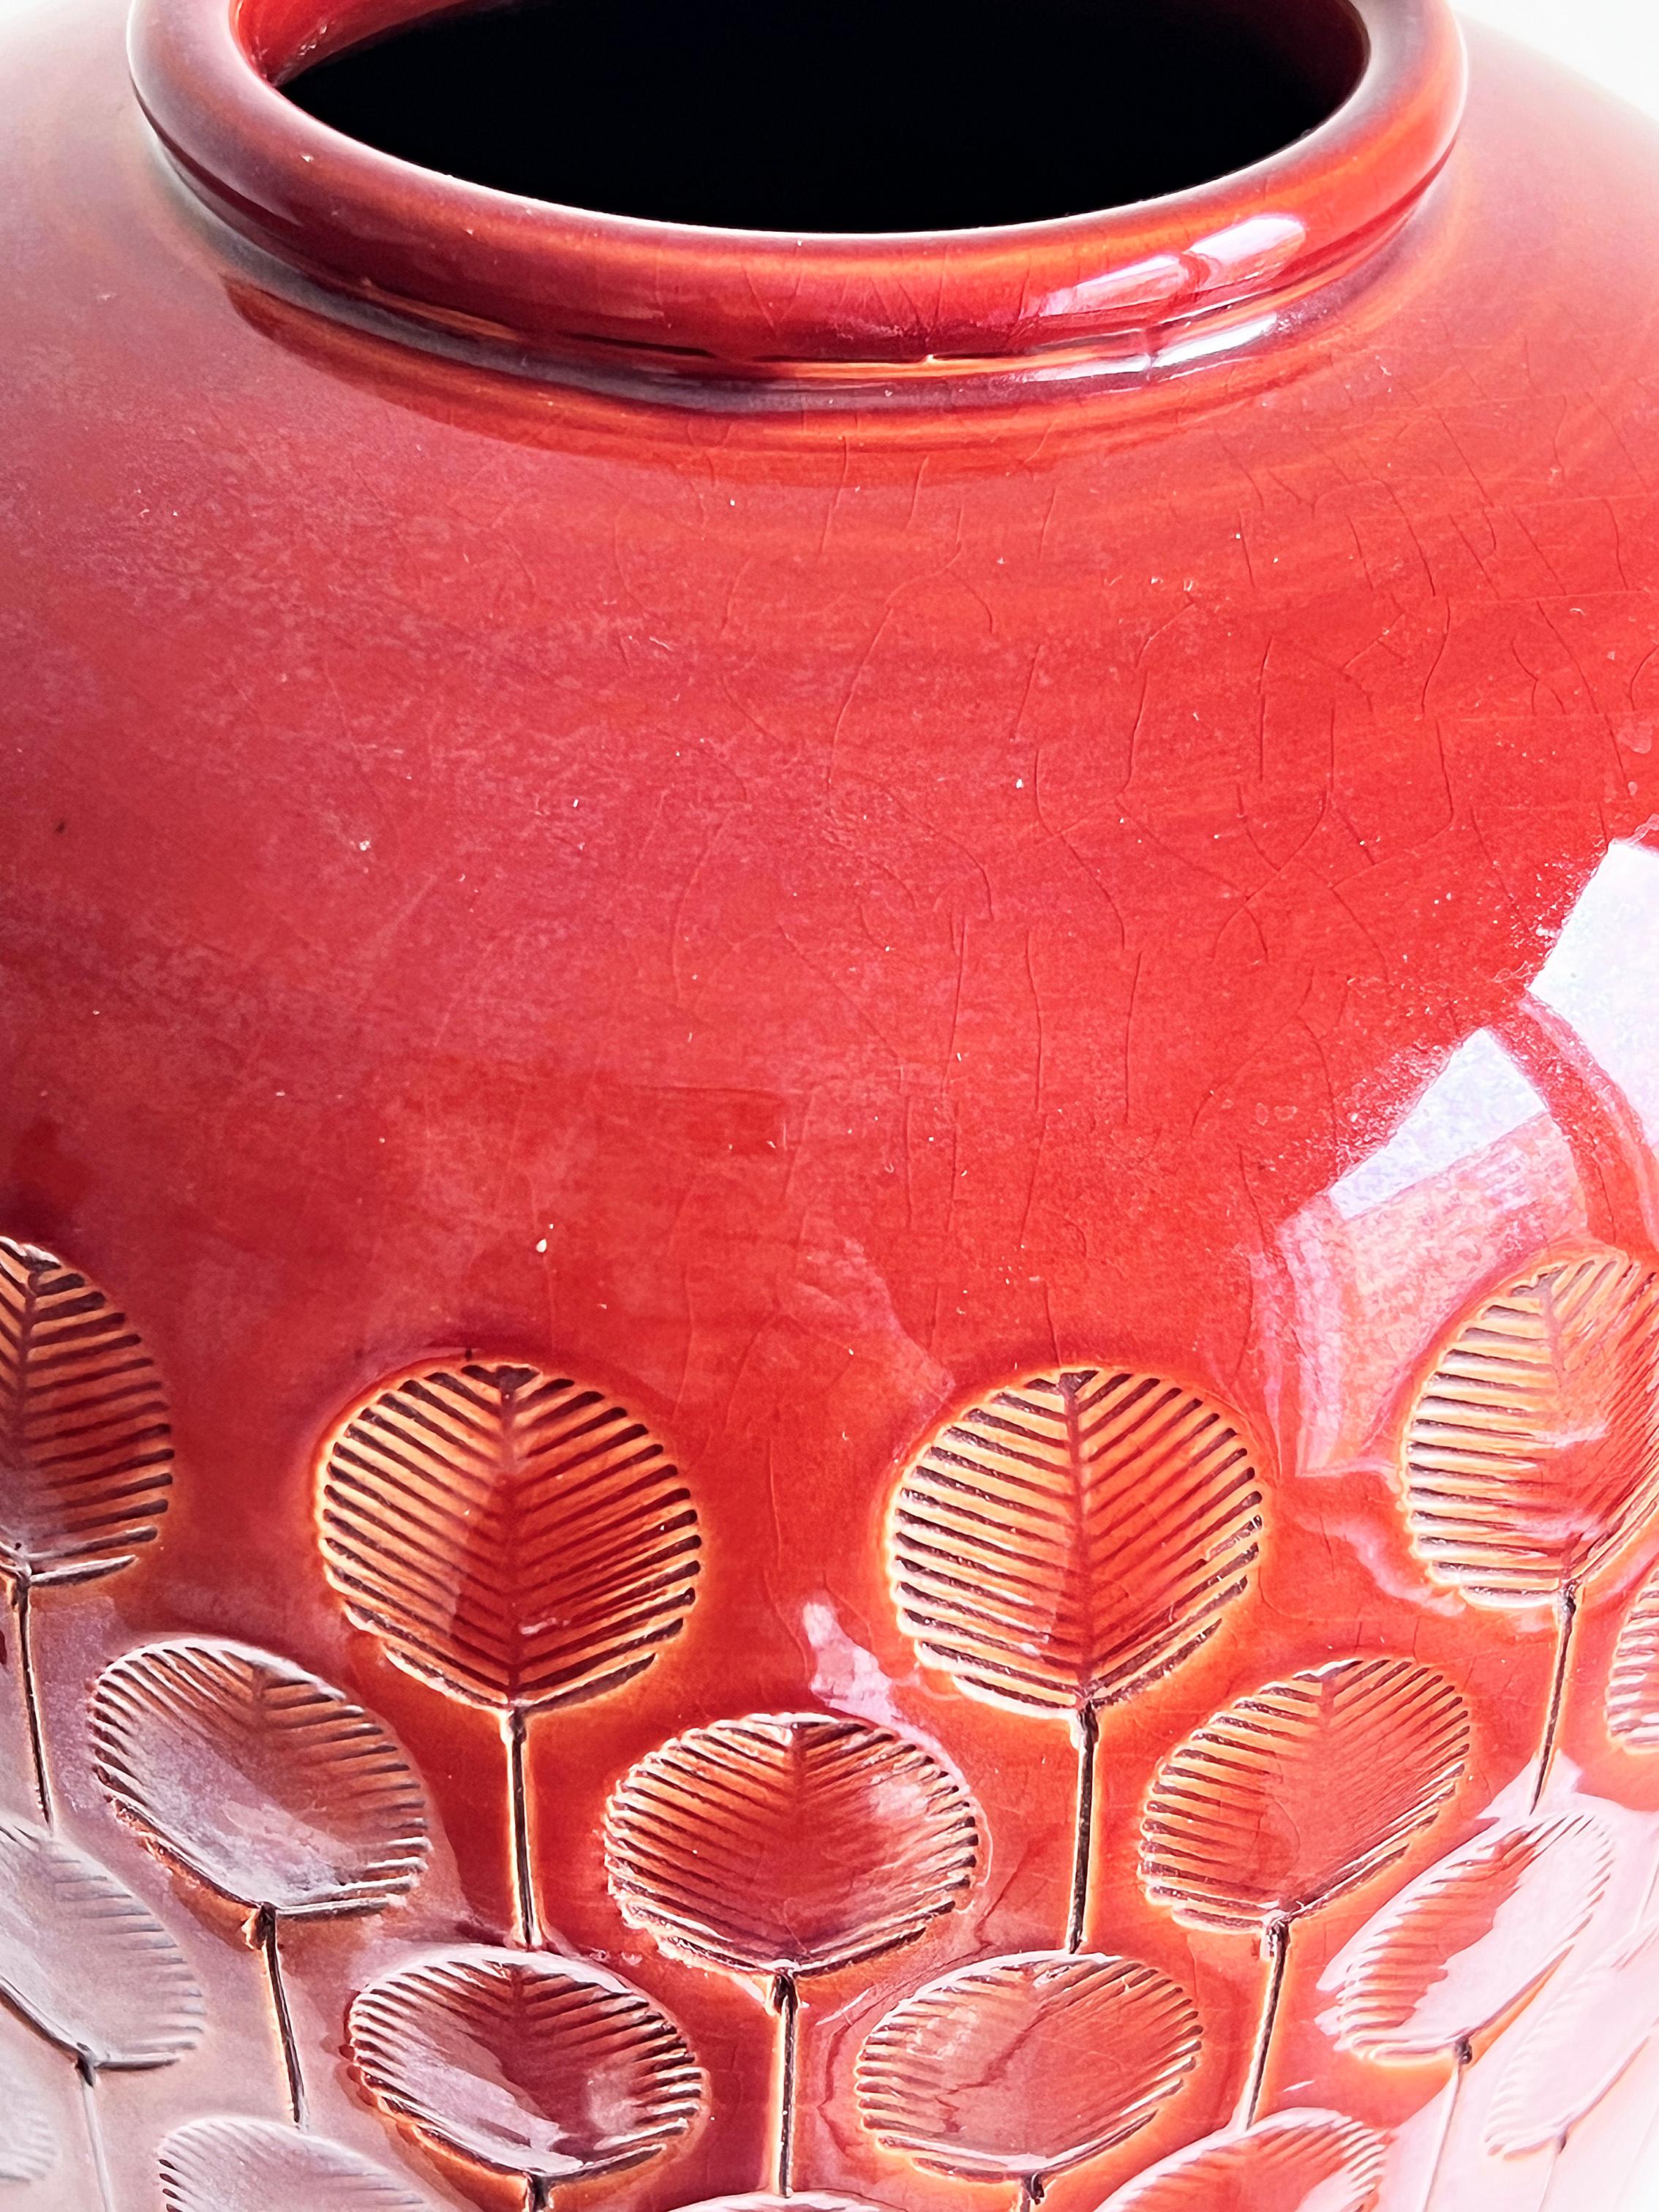 Italian Rust Red Ceramic Floor Vase by Flavia/Bitossi, 1970s For Sale 1